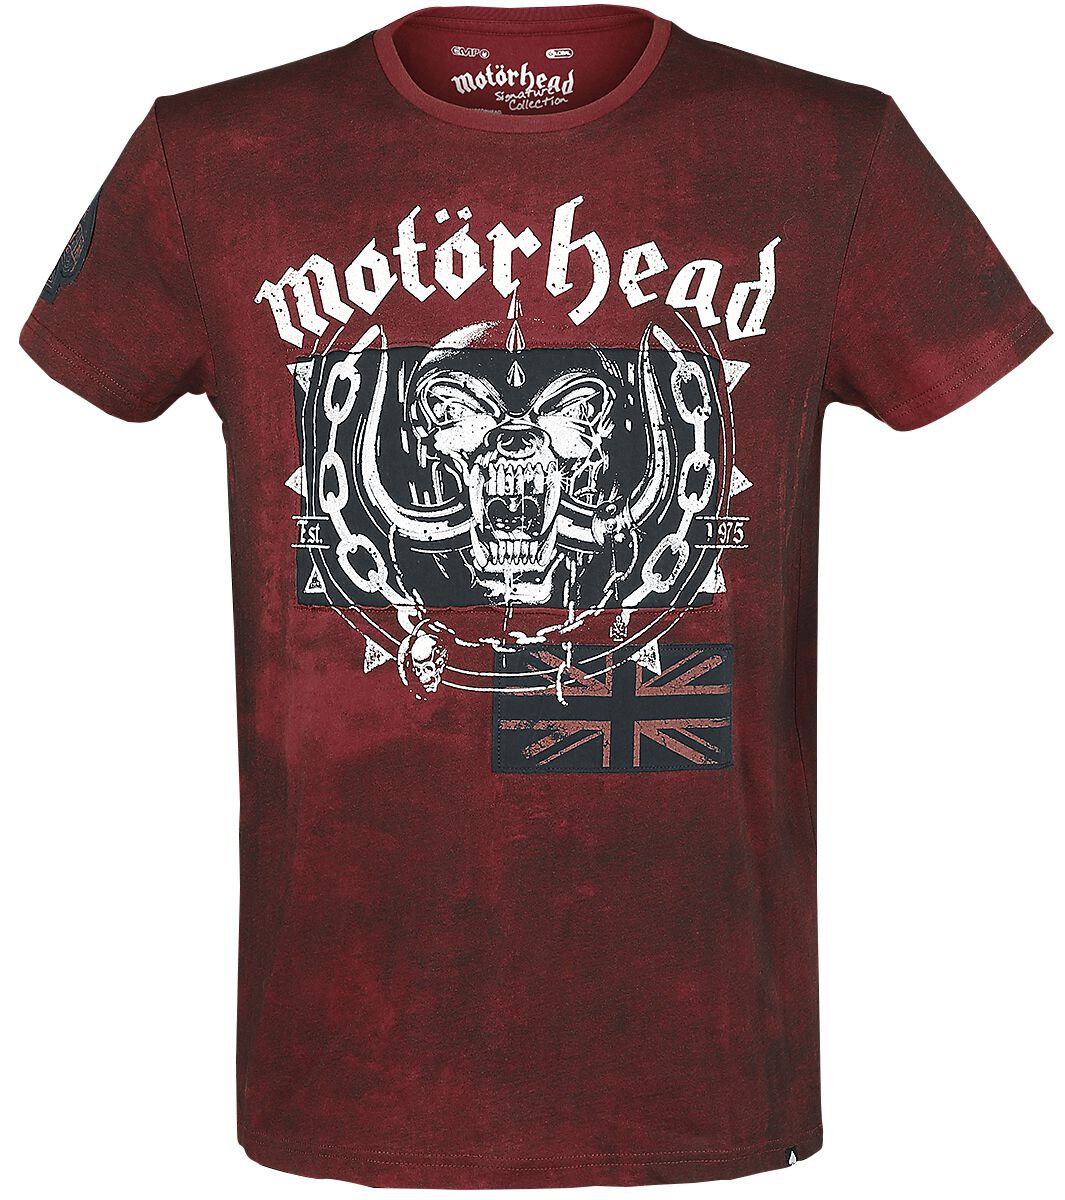 Motörhead T-Shirt - EMP Signature Collection - S bis 5XL - für Männer - Größe 4XL - dunkelrot  - EMP exklusives Merchandise!